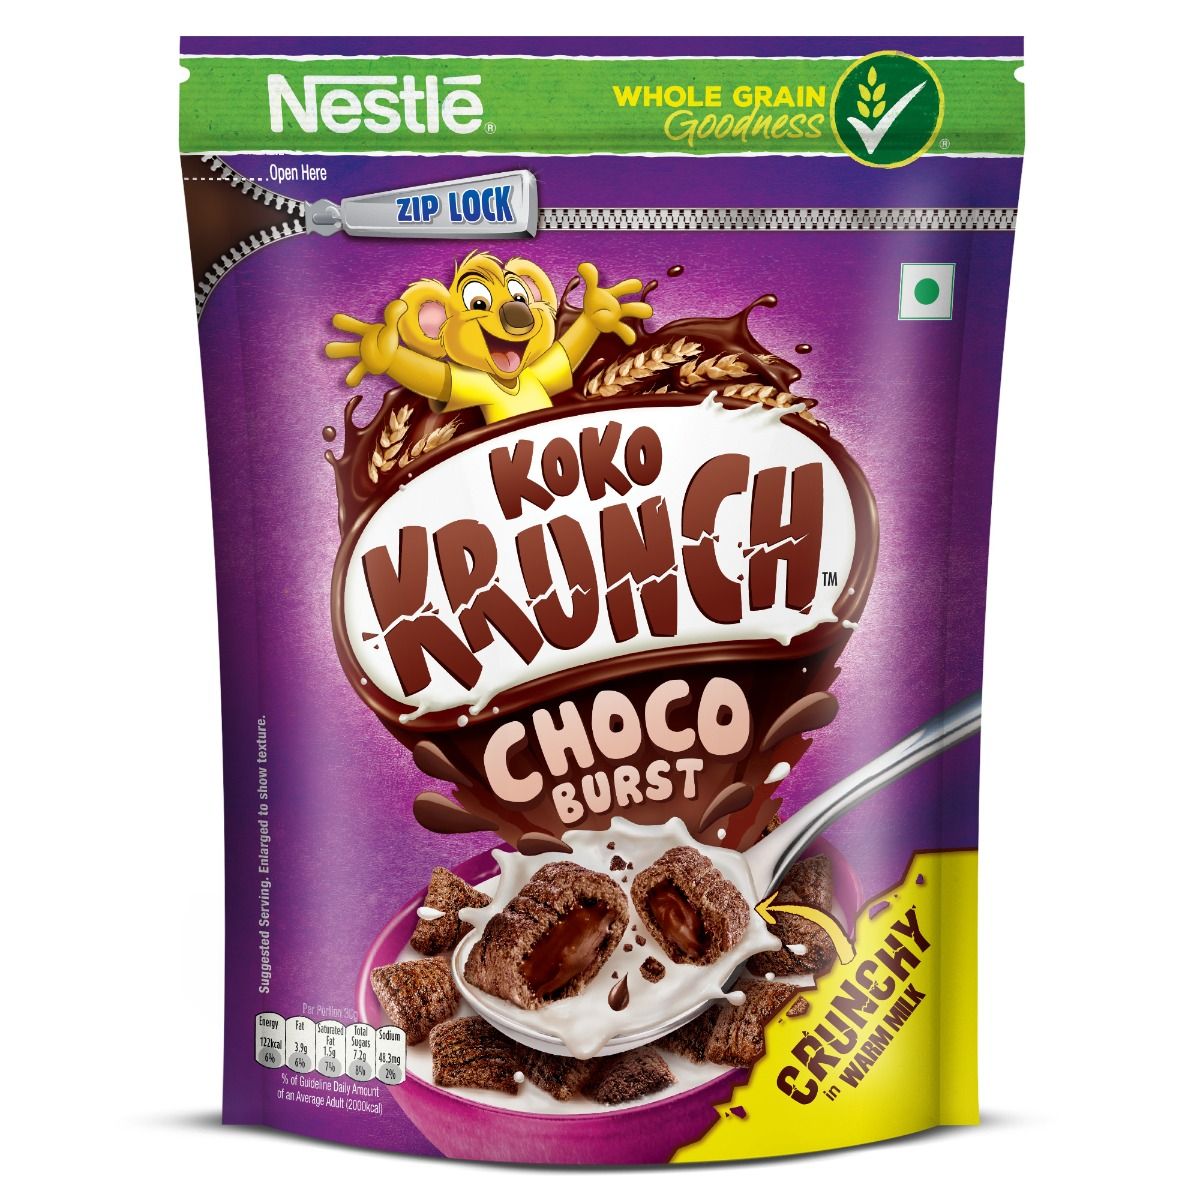 Buy Nestle Koko Krunch Choco Burst, 250 gm Online